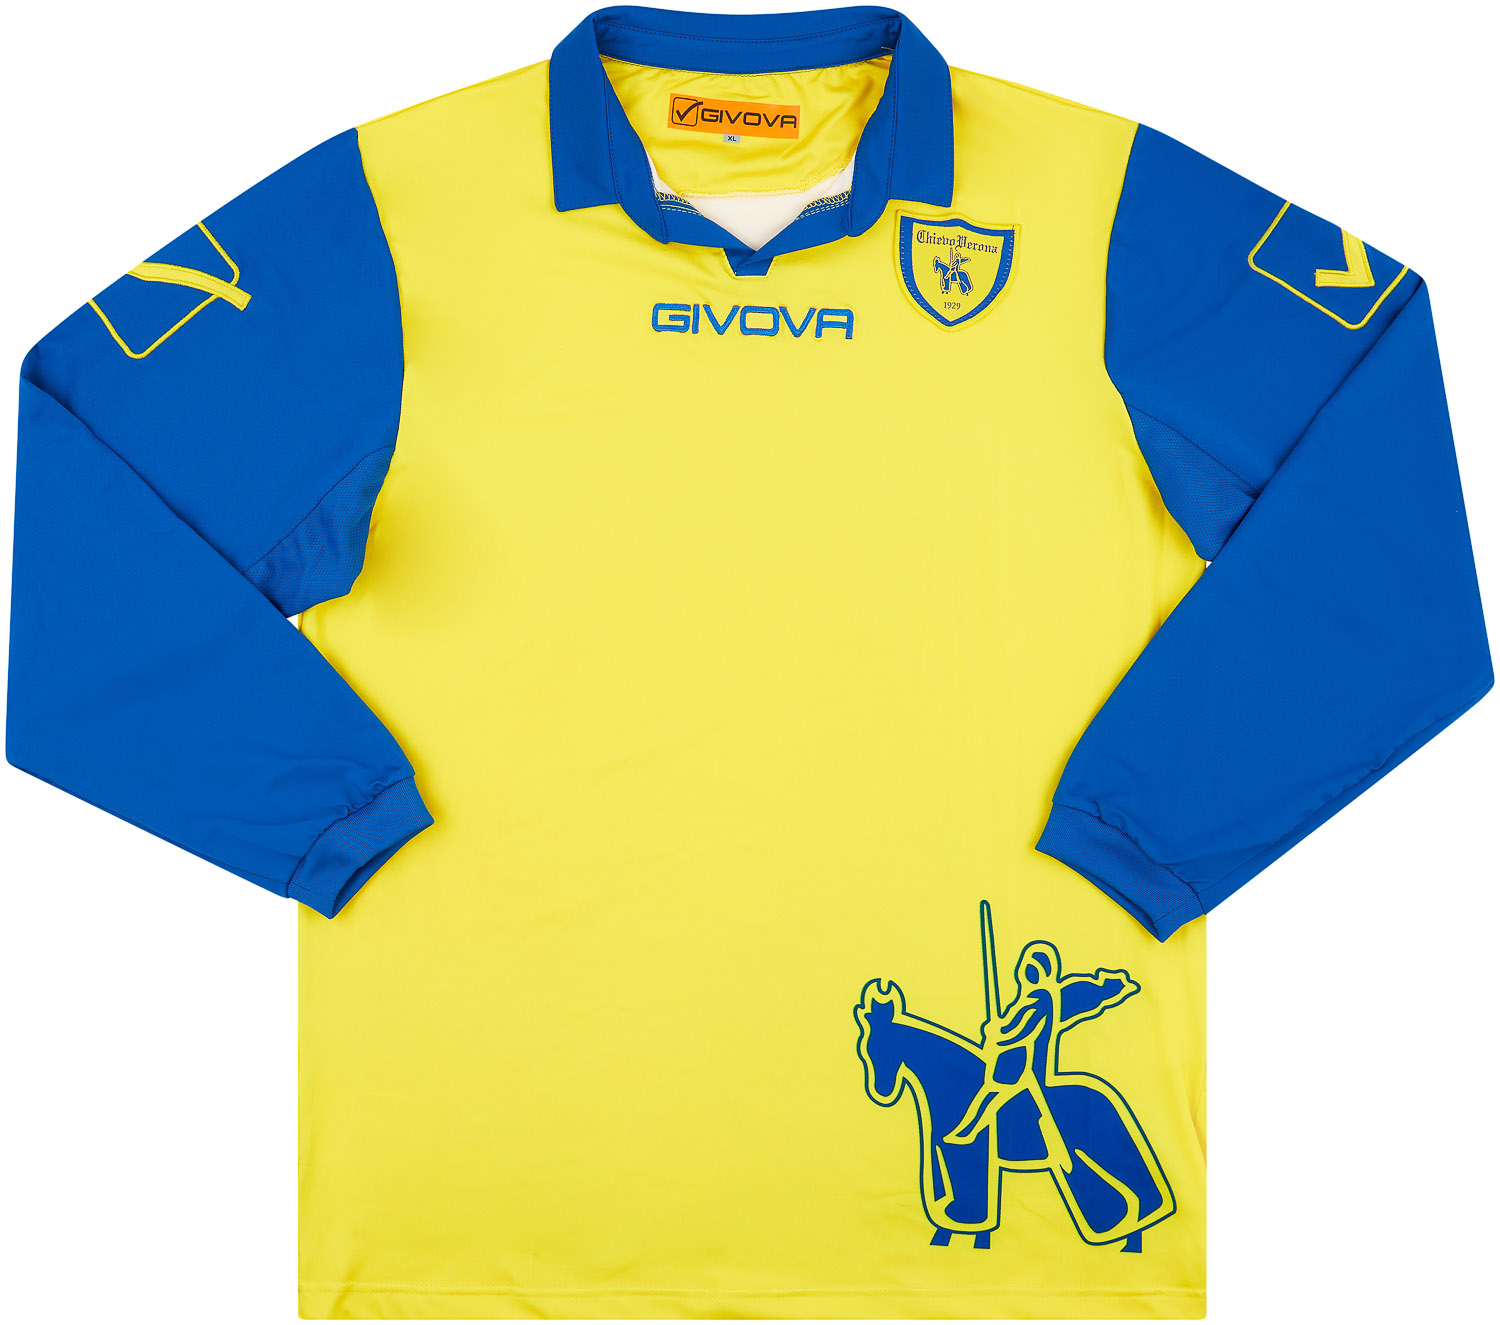 2014-15 Chievo Verona Home Shirt - 9/10 - ()